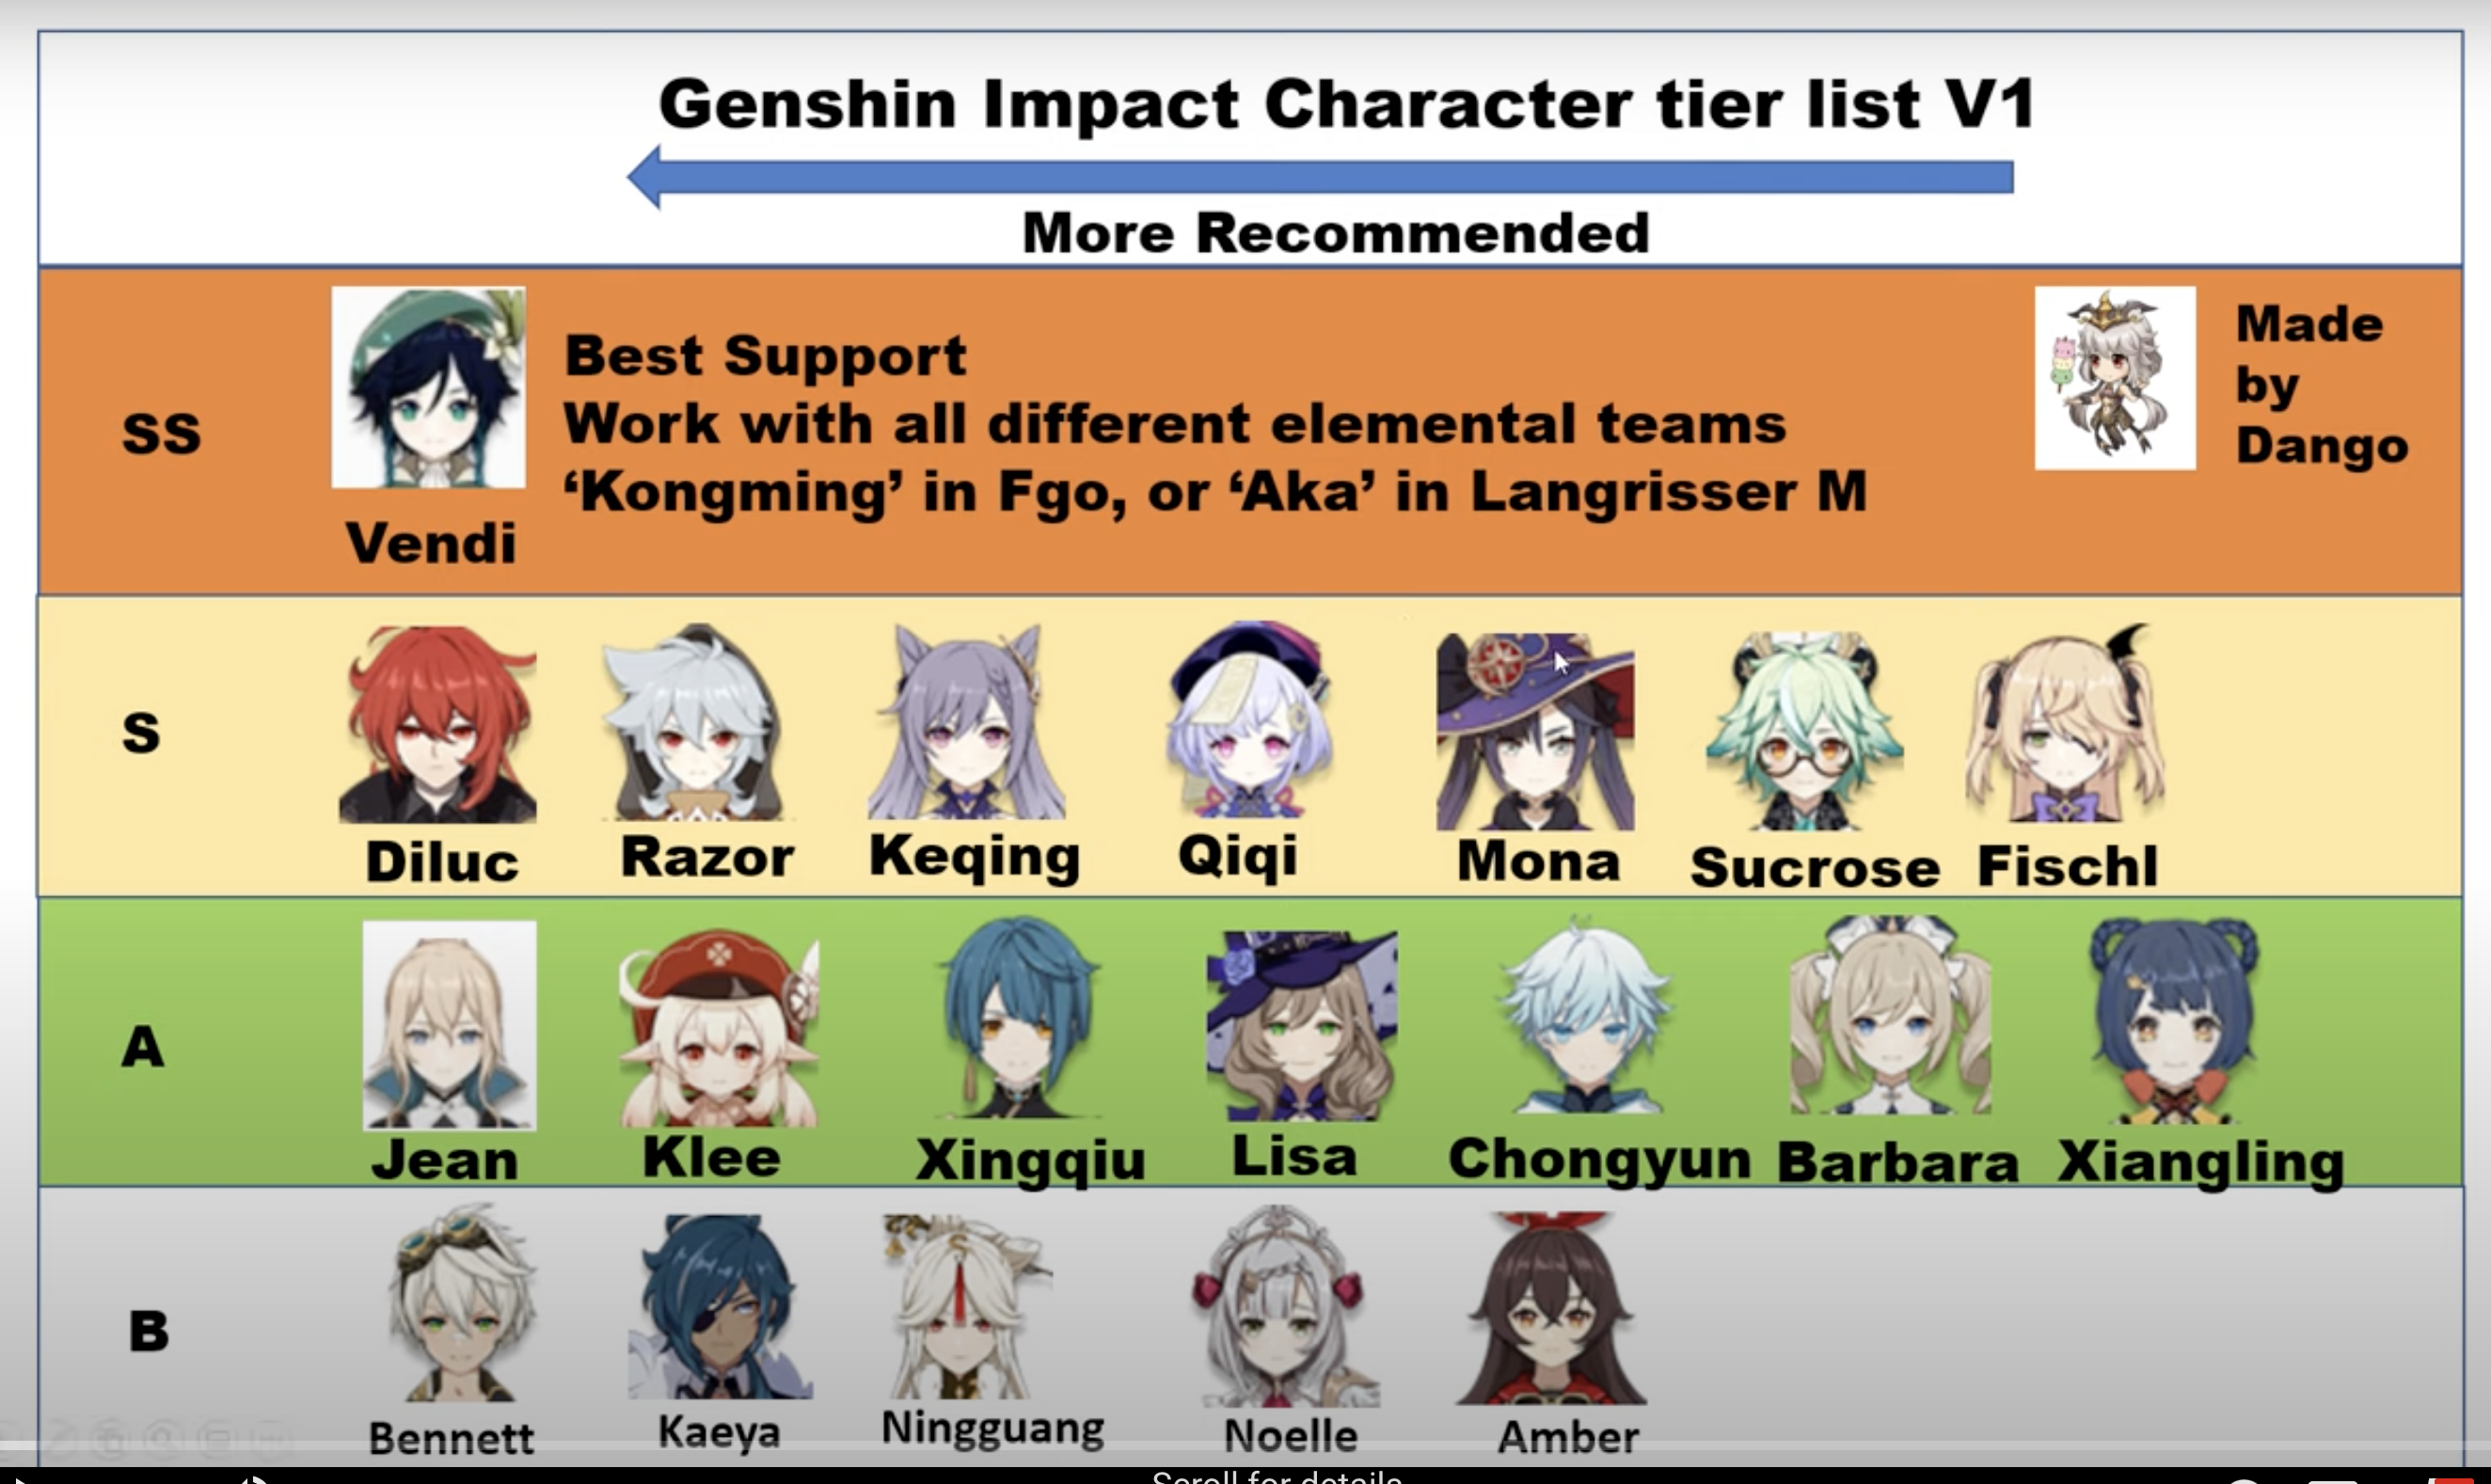 Клон геншина. Геншин персонажи имена. Персонажи Геншина Импакт имена. Genshin Impact персонажи Tier list. Список персов Геншин Импакт.